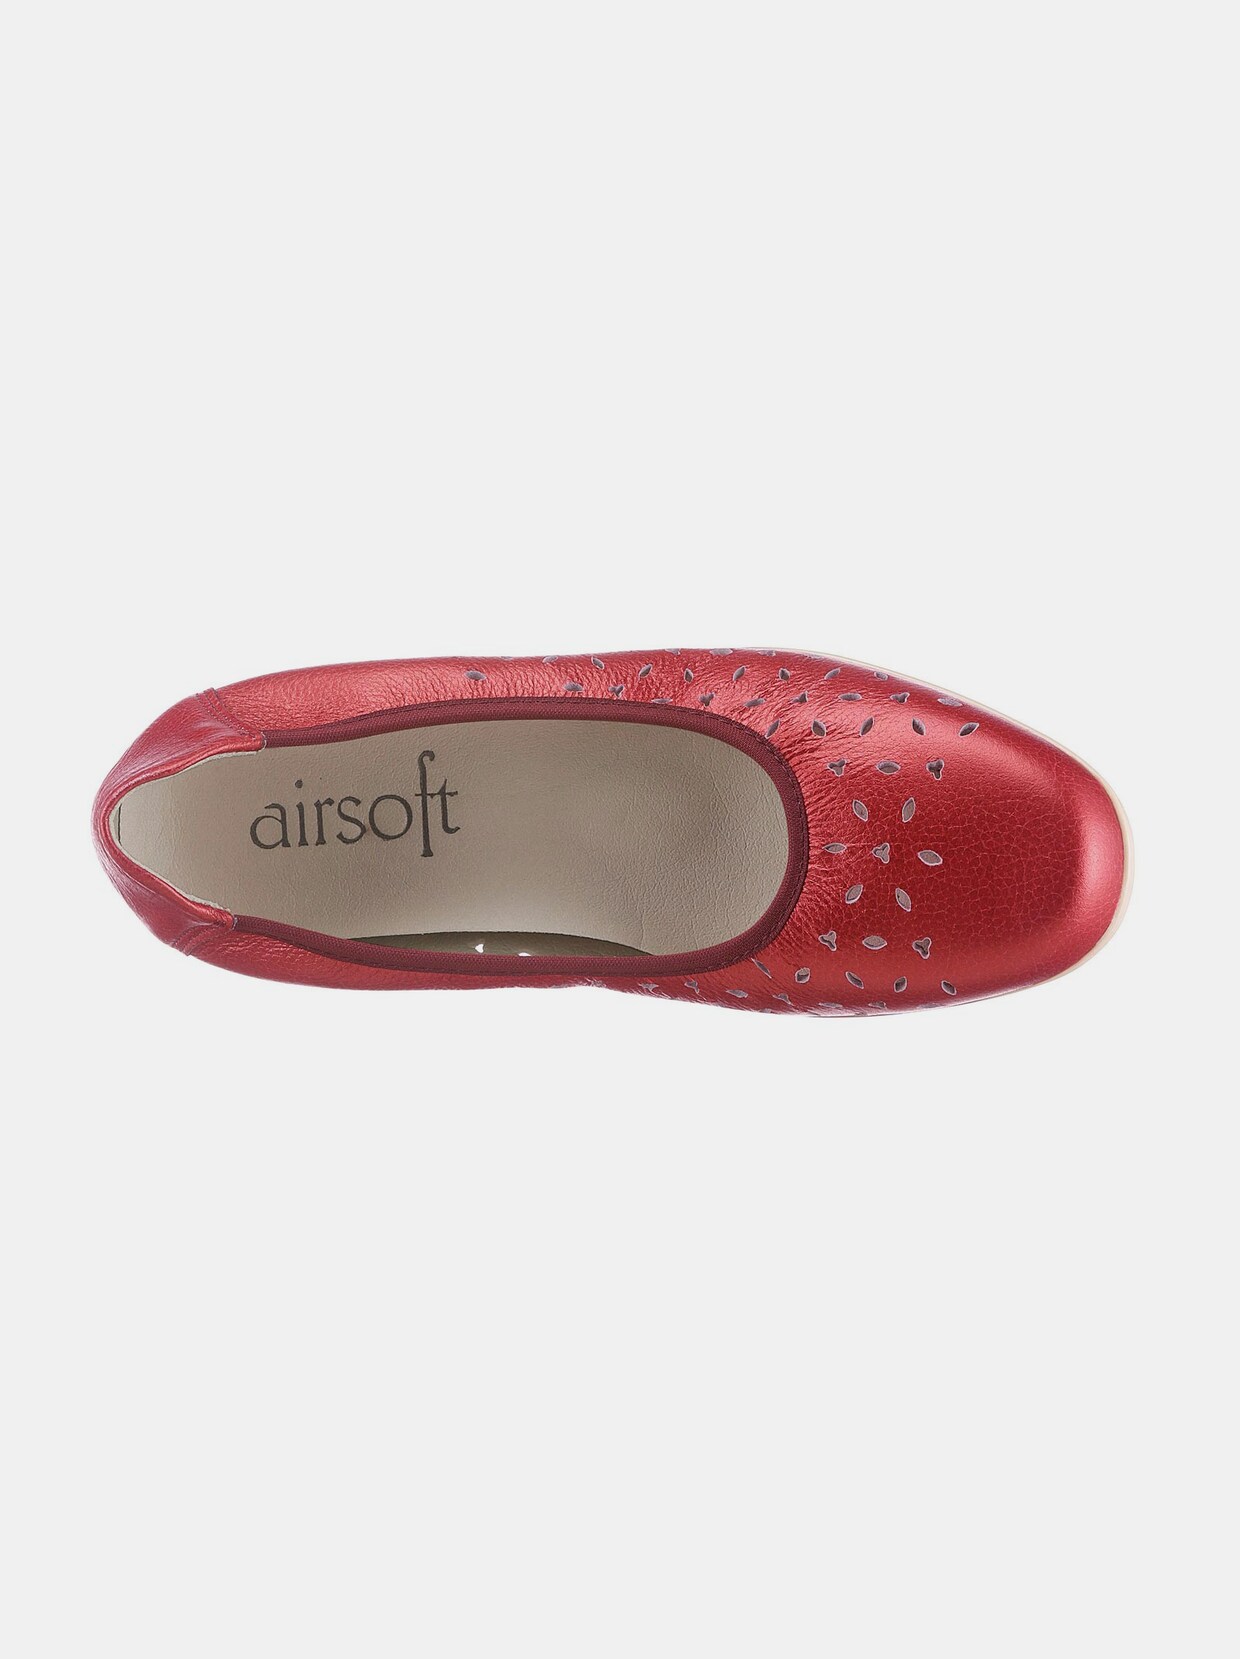 Airsoft Ballerina - rood